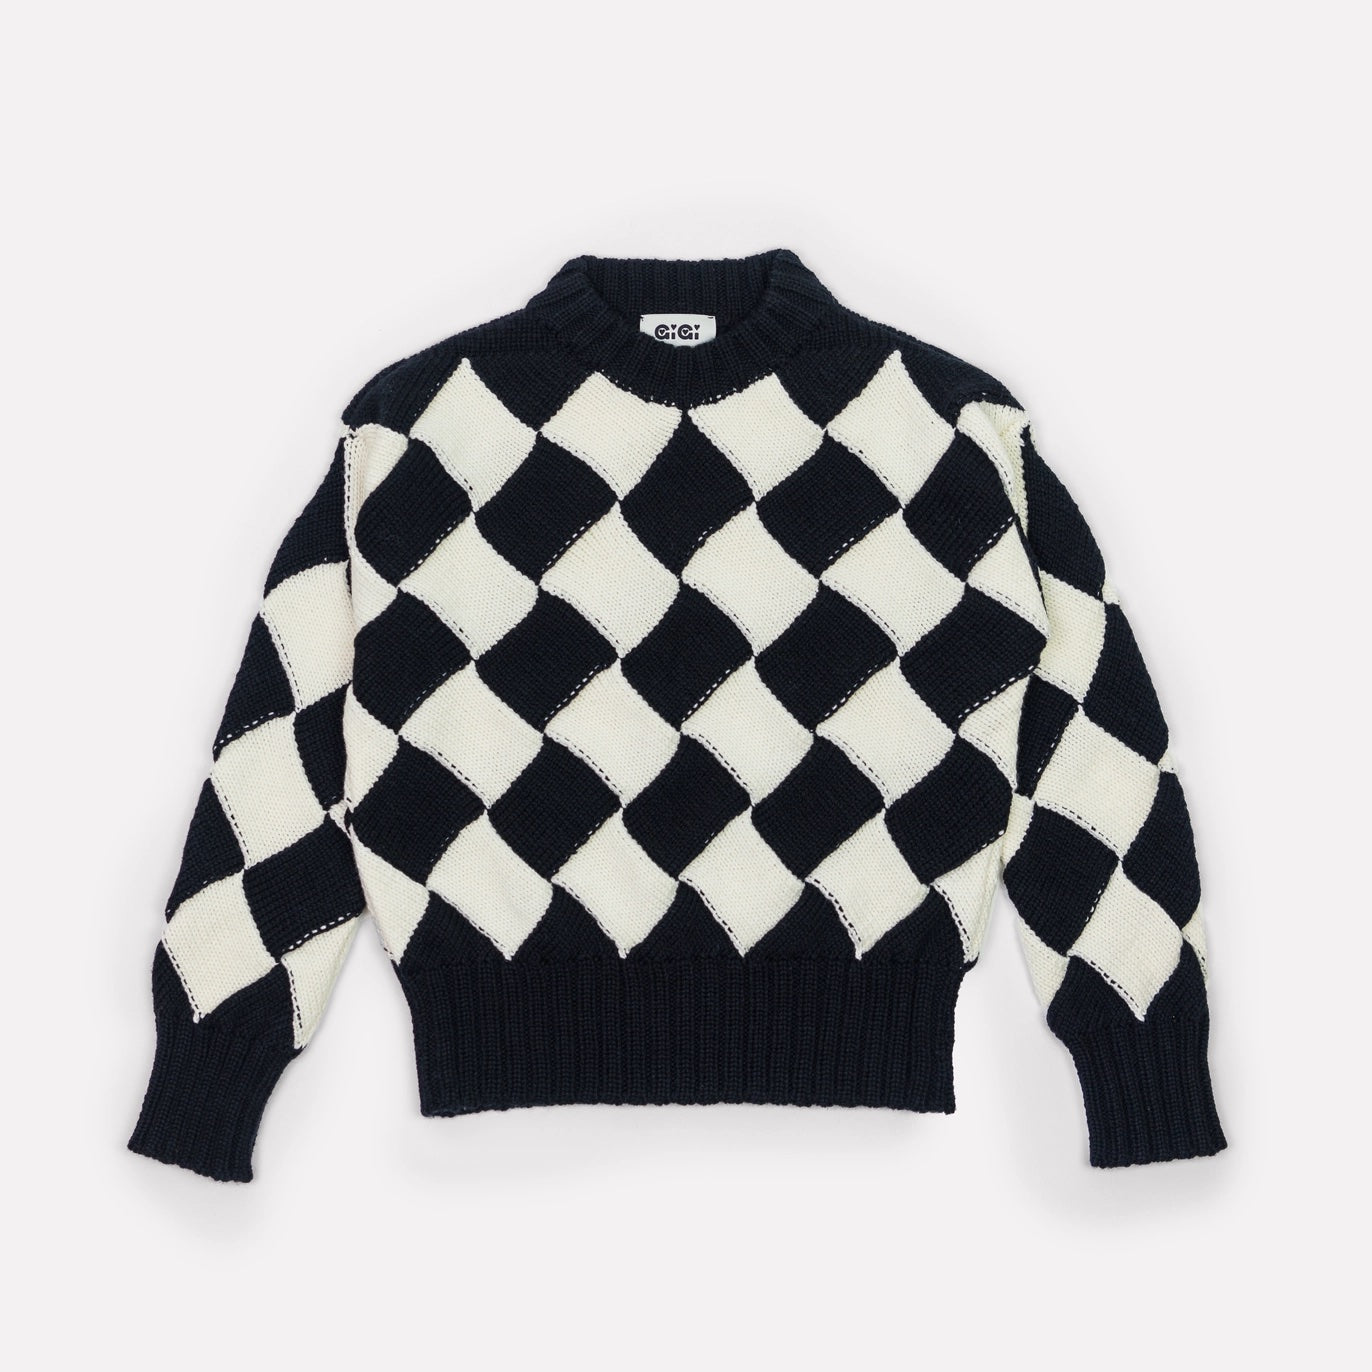 gigi-knitwear-basket-weave-black-and-white-sweater-02